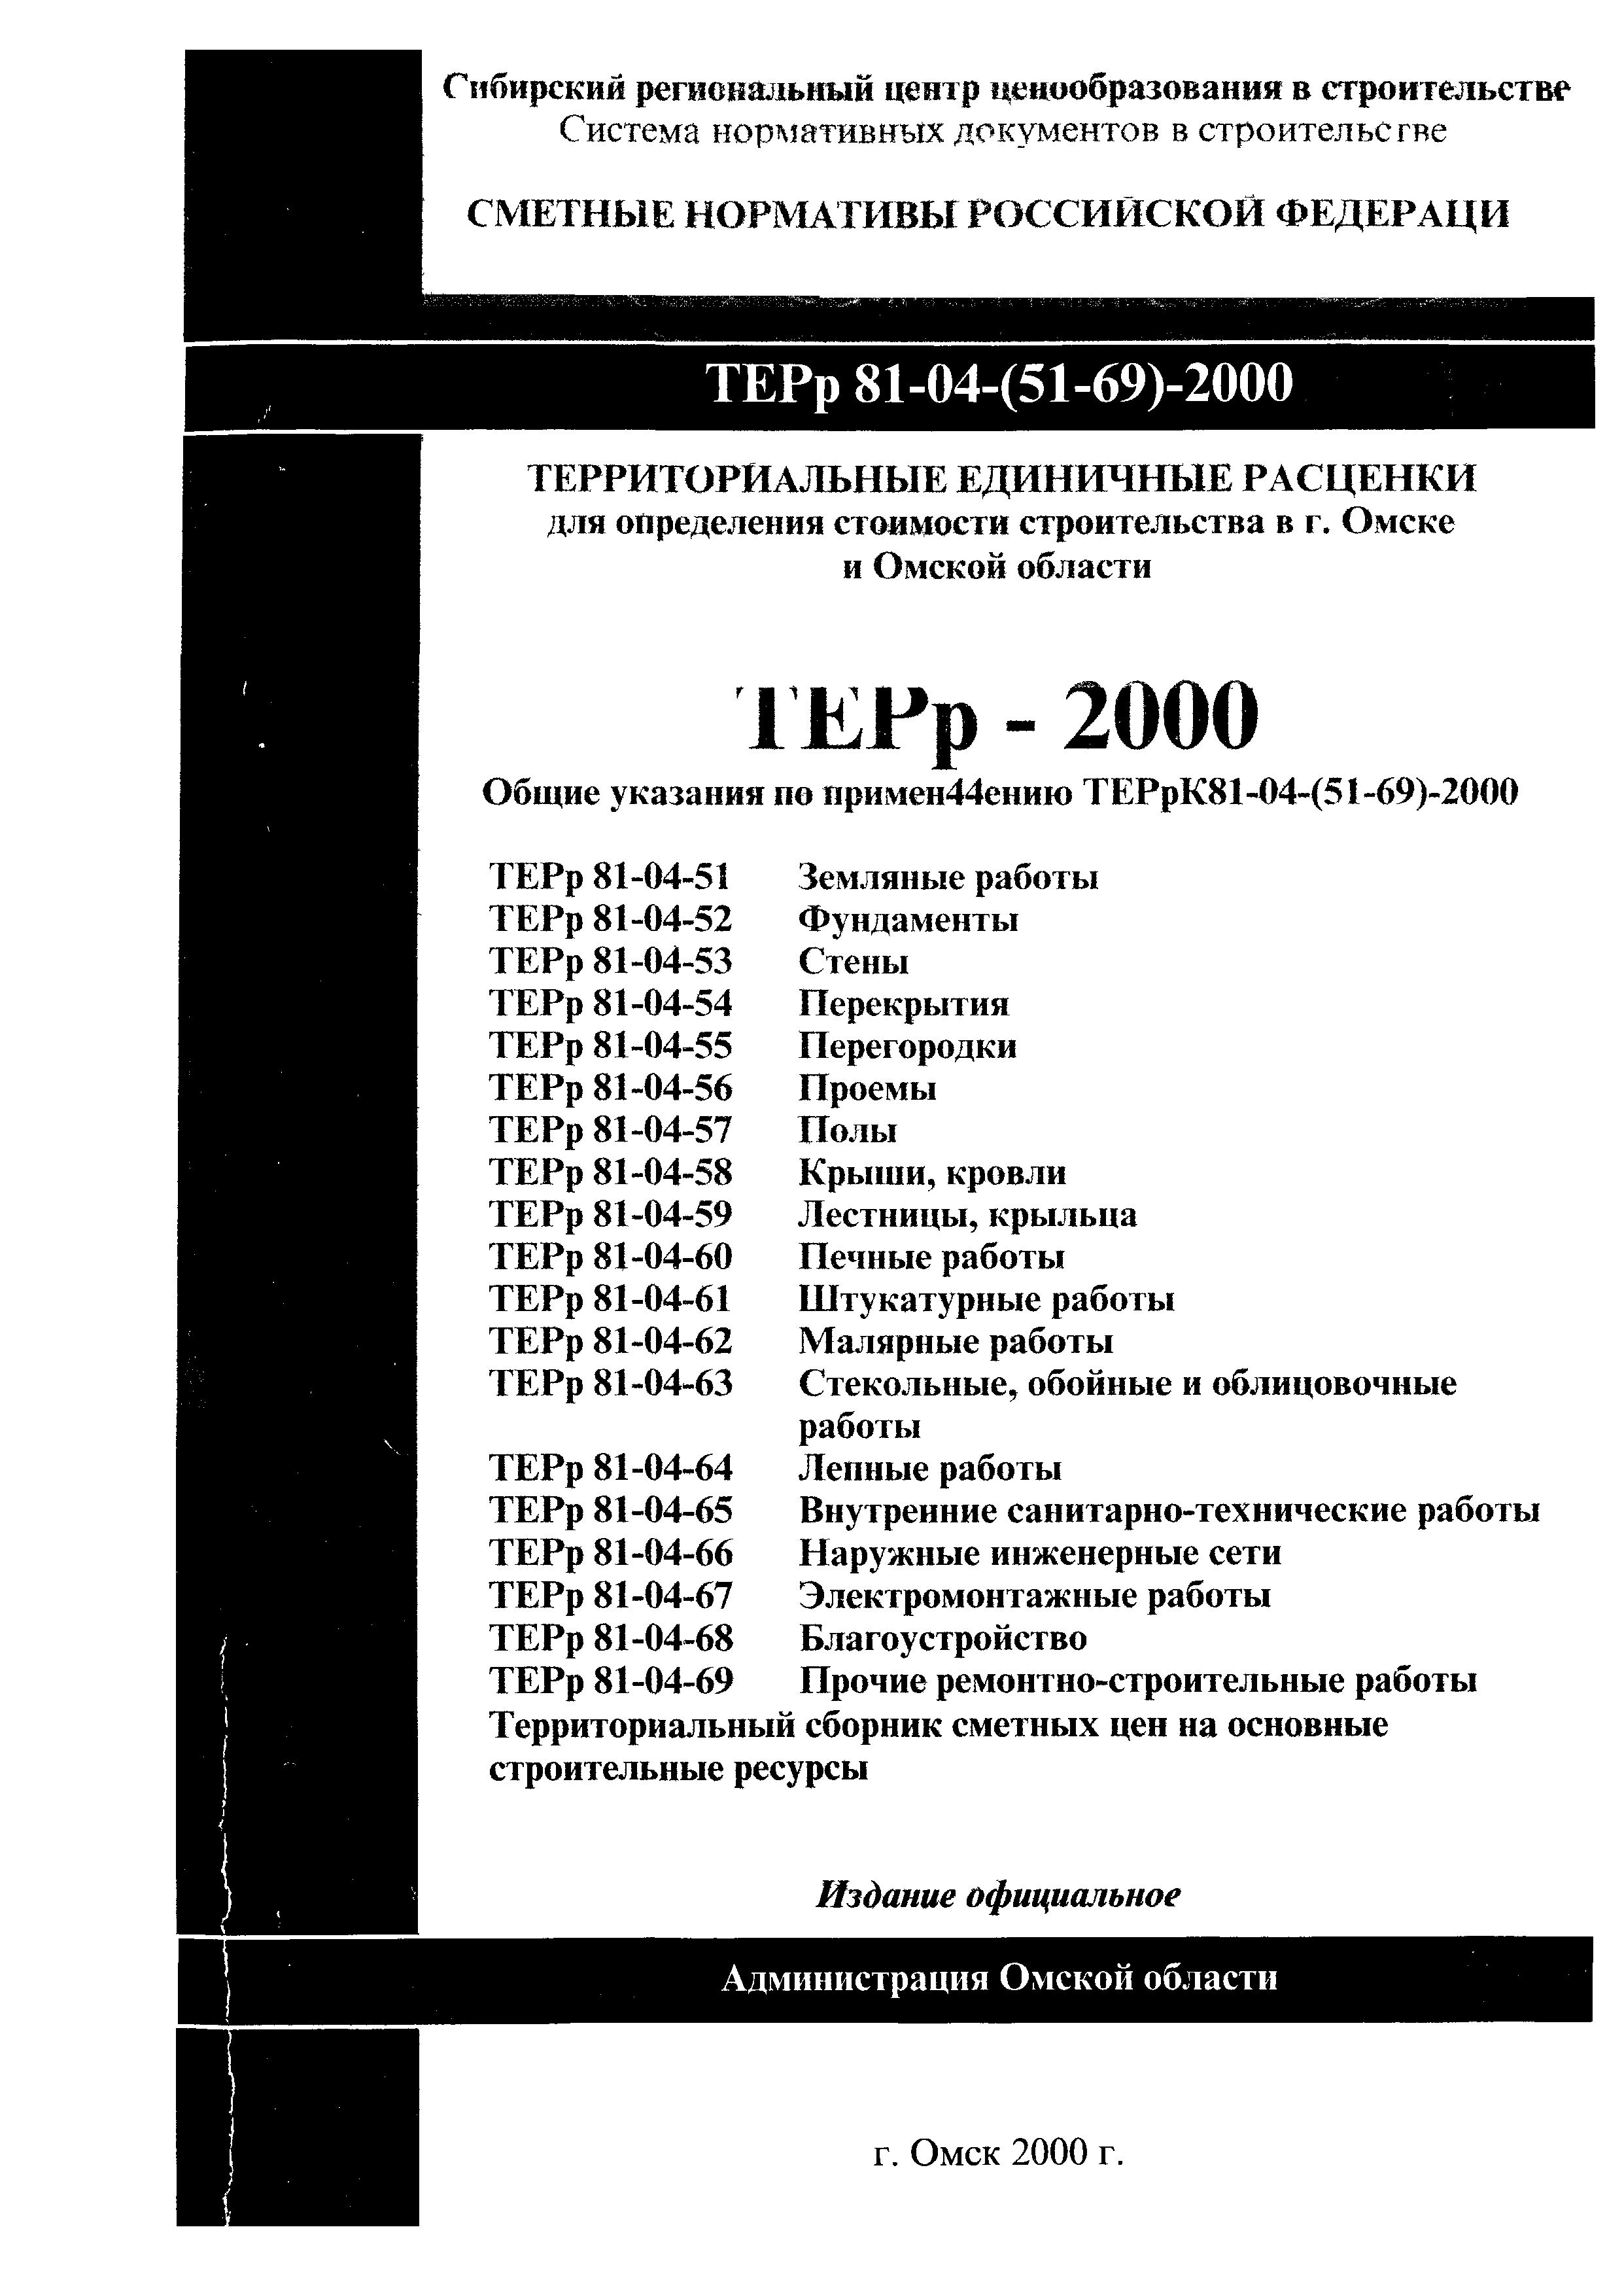 ТЕРр Омской области 2000-53